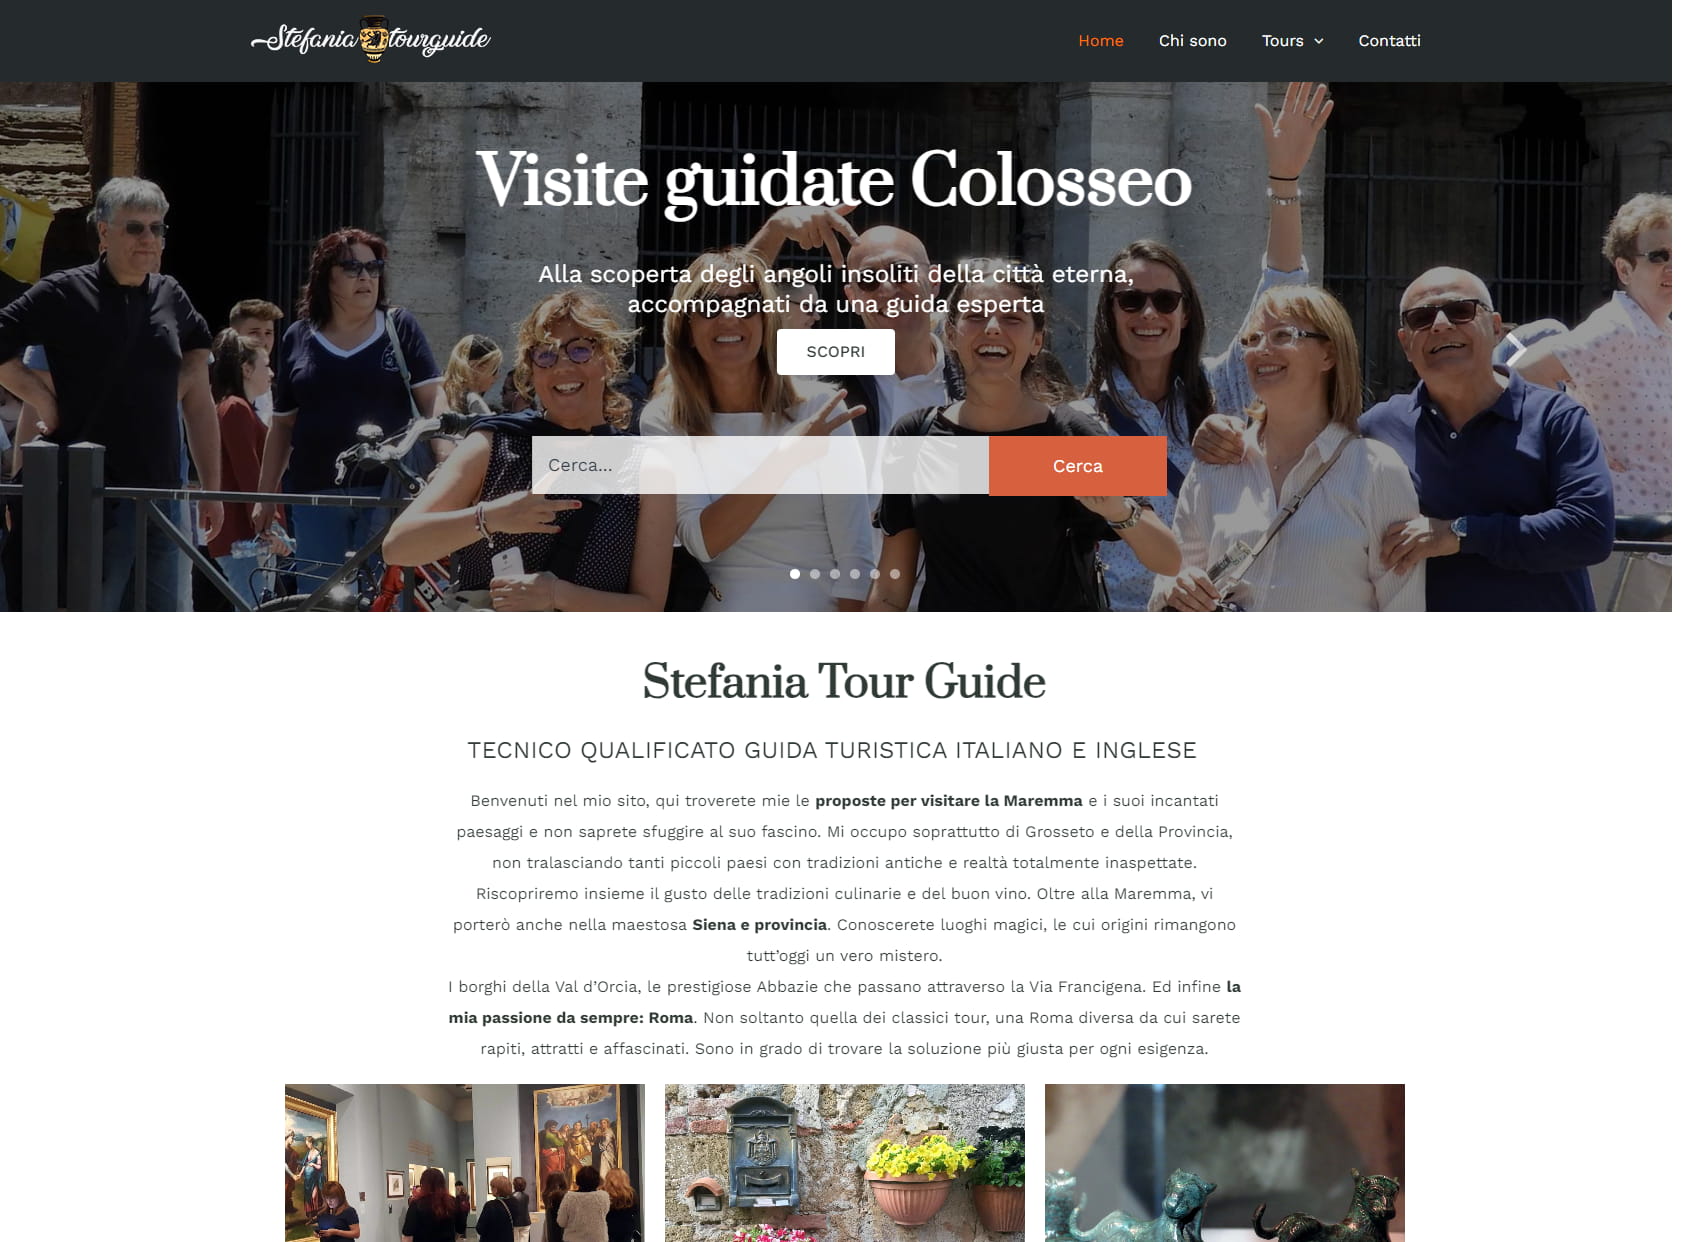 Stefania Tour Guide | Guida turistica ufficiale